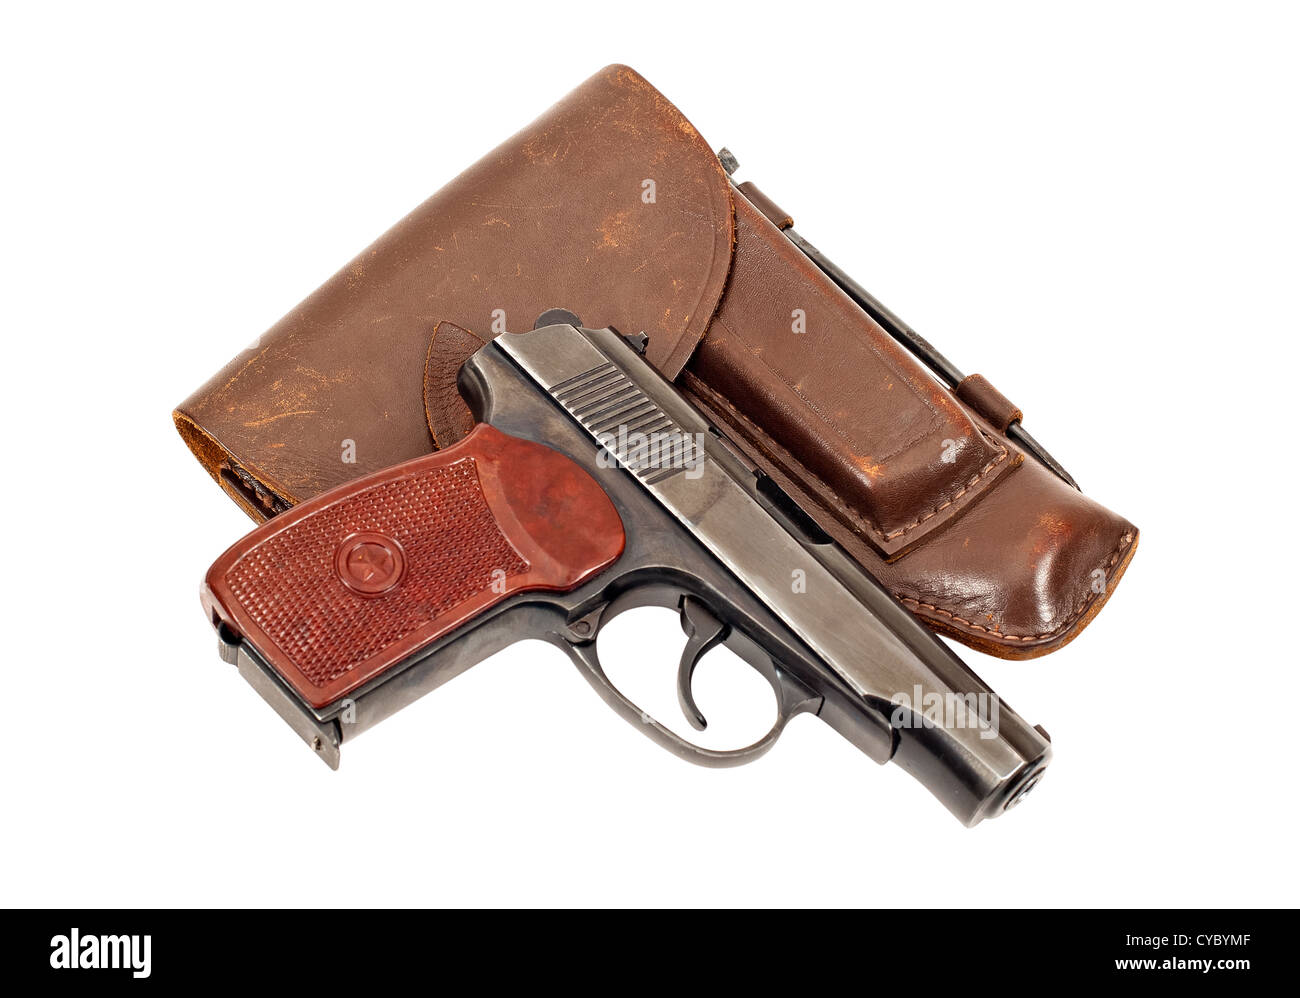 Russian handgun and holster on white background Stock Photo